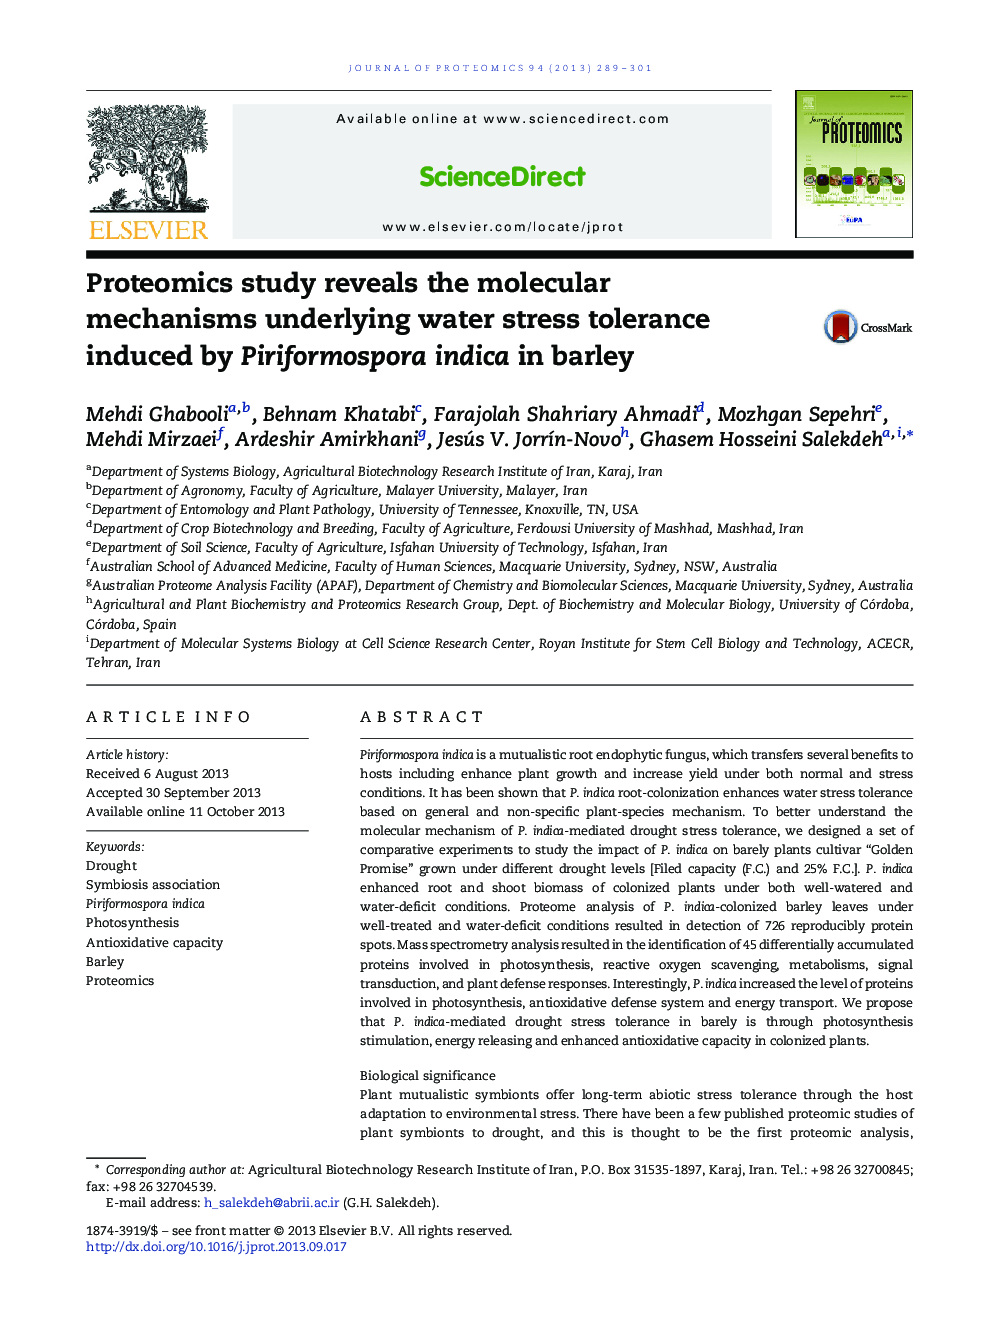 Proteomics study reveals the molecular mechanisms underlying water stress tolerance induced by Piriformospora indica in barley